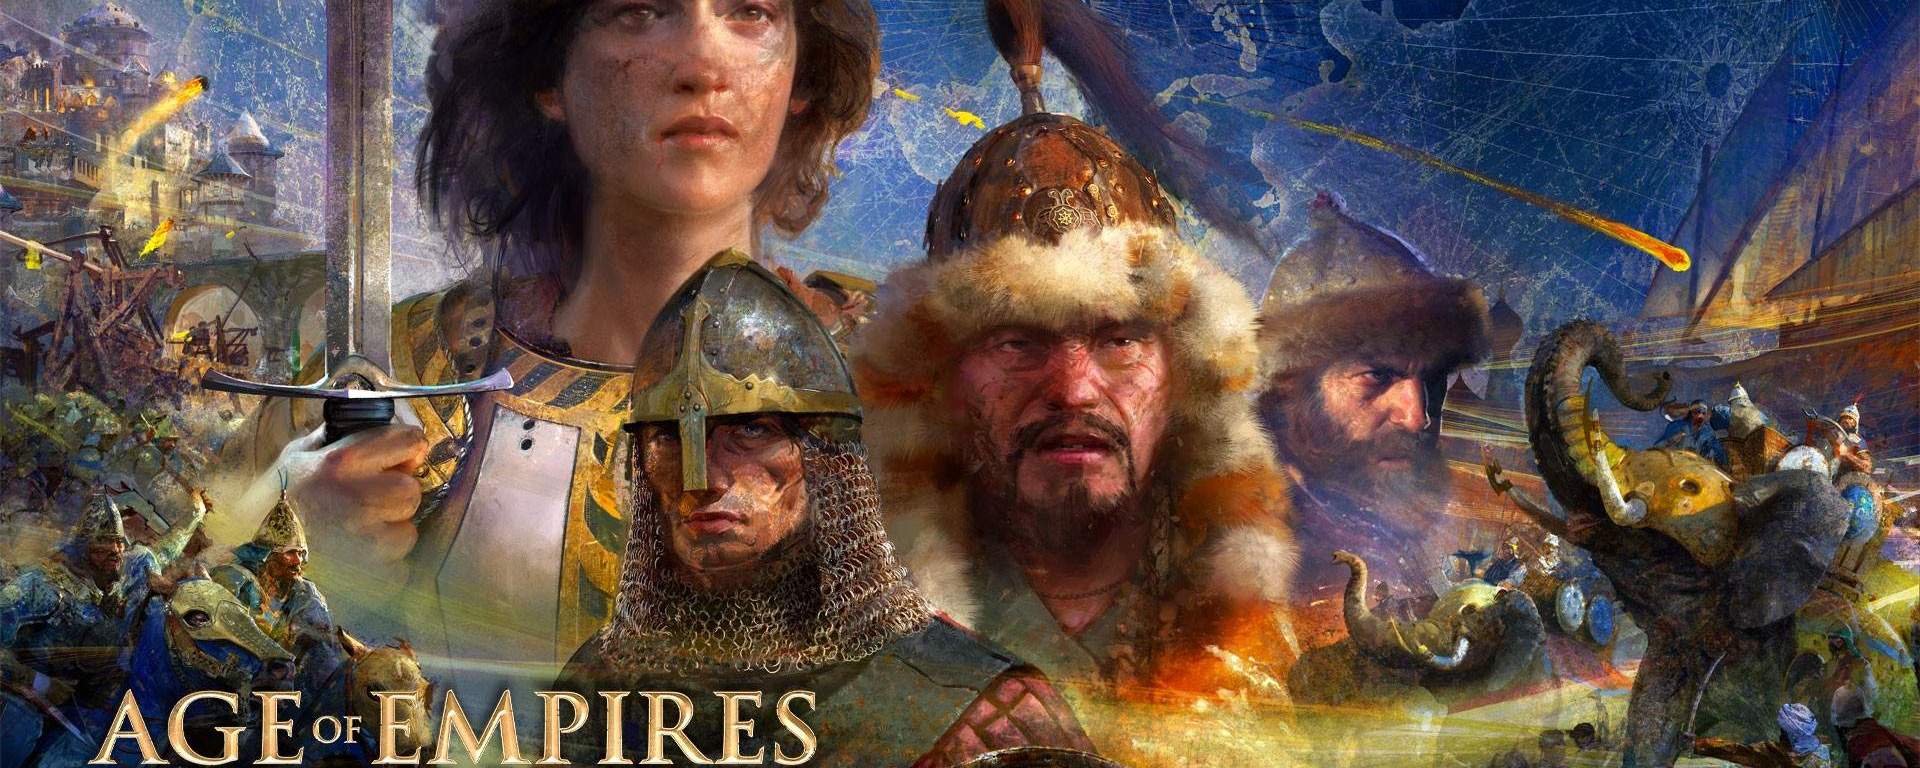 Análisis de Age of Empires IV